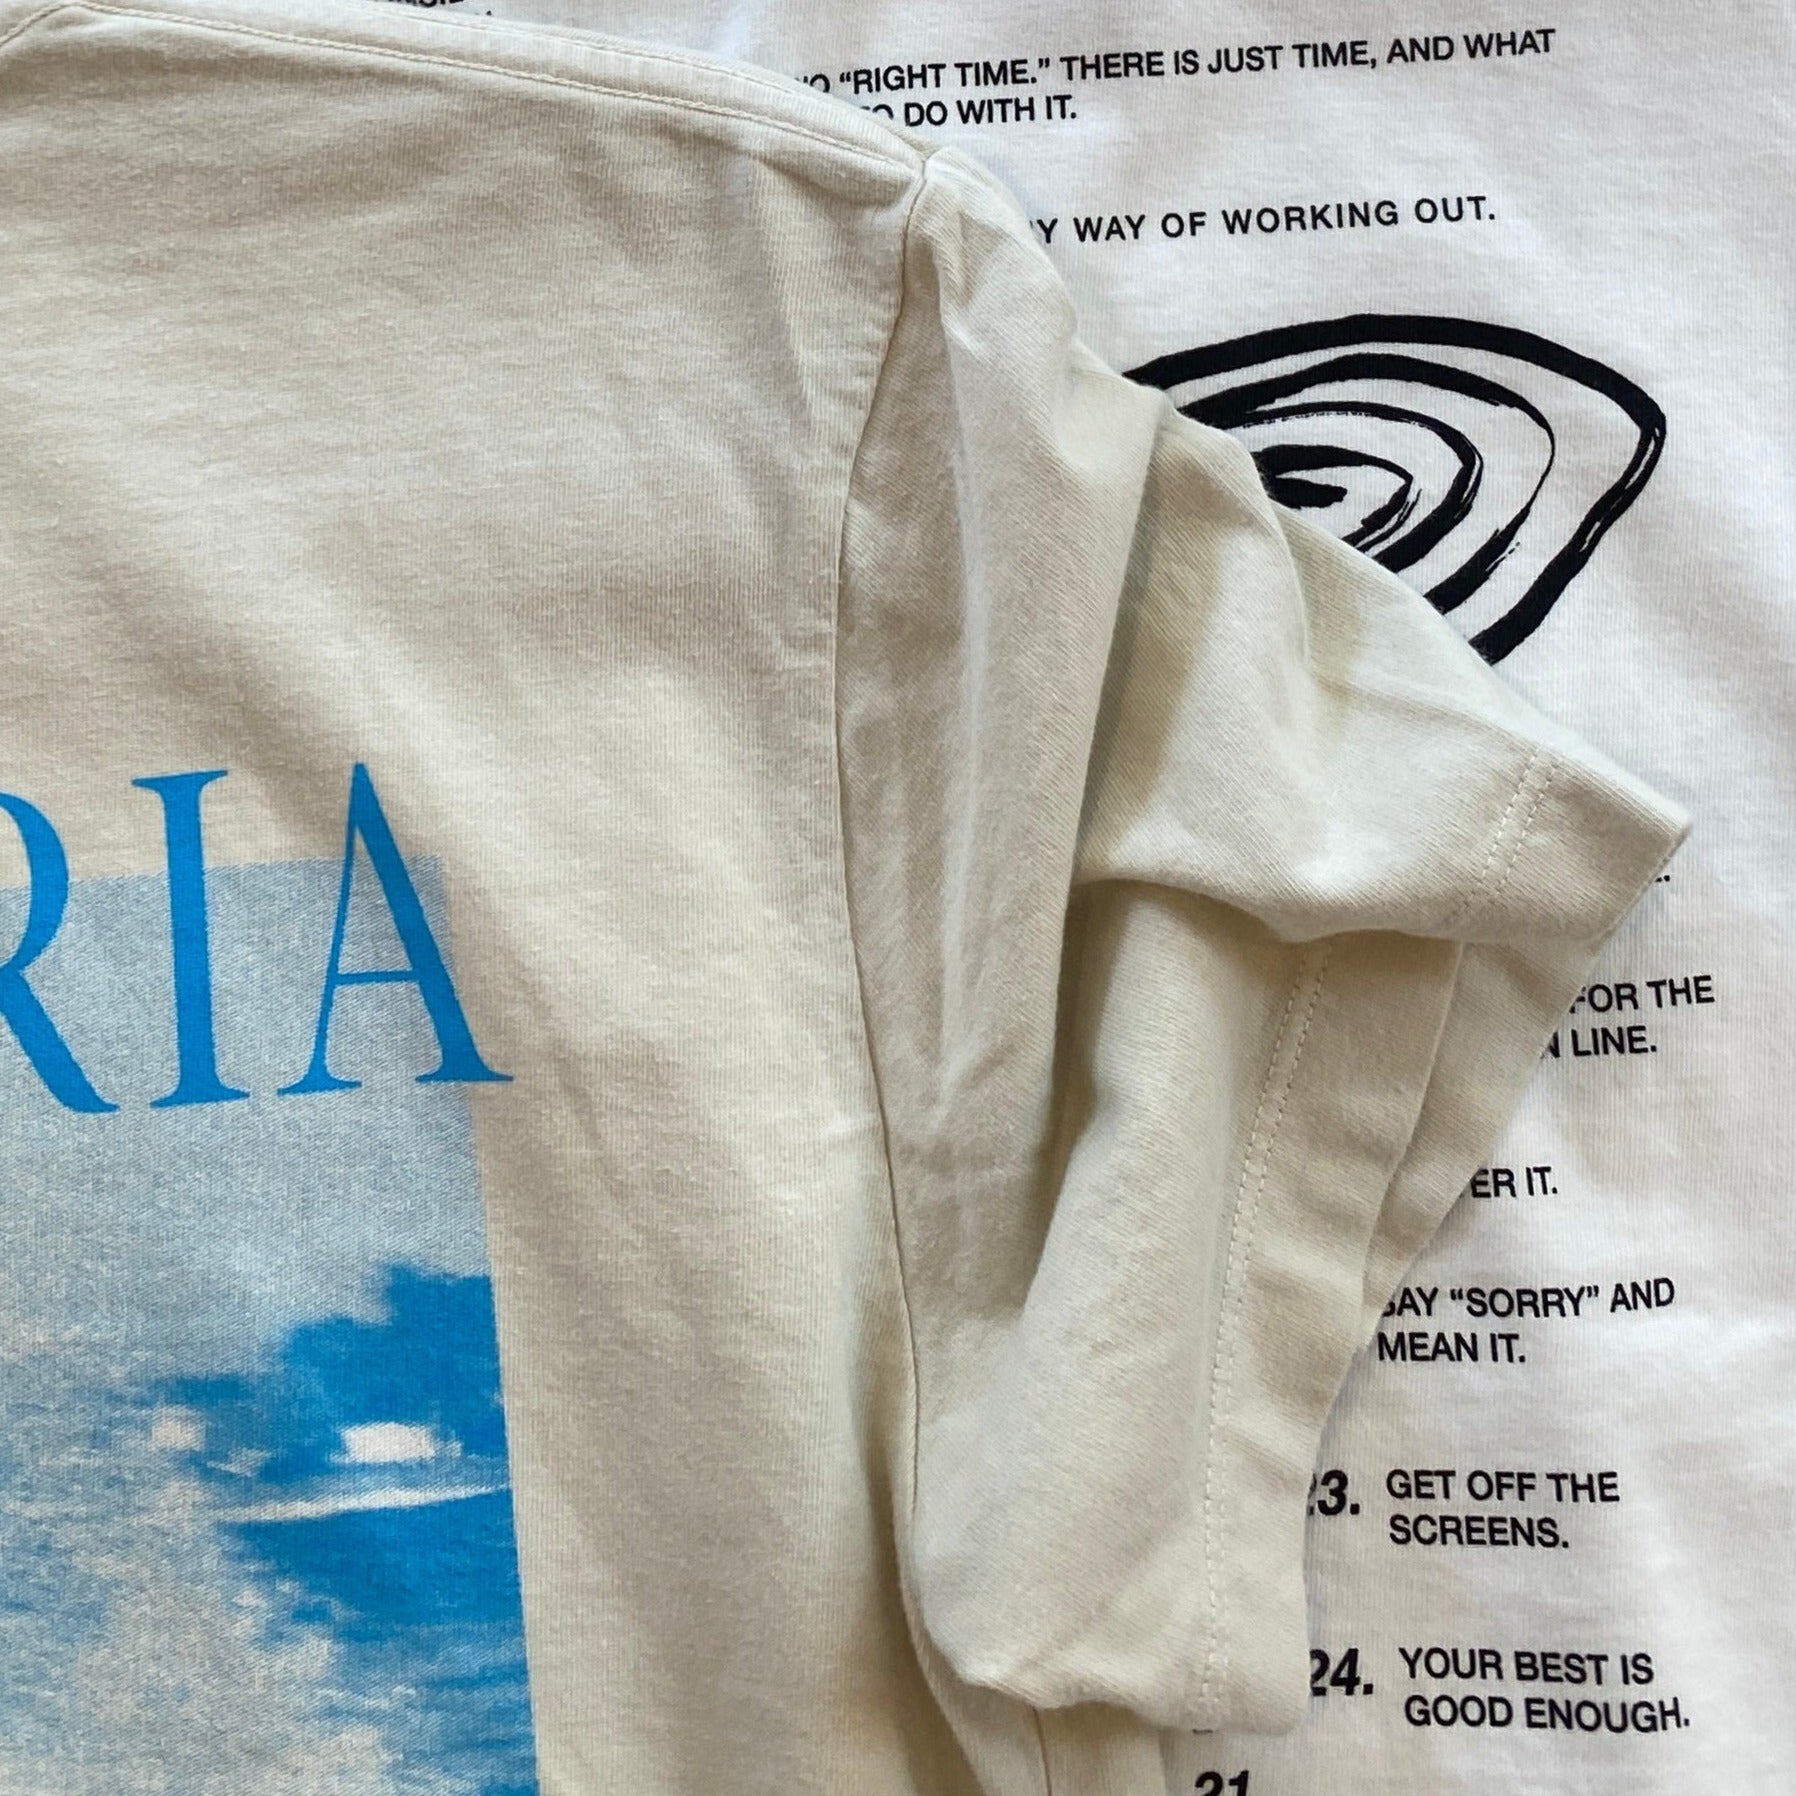 Surf Euphoria T-Shirt